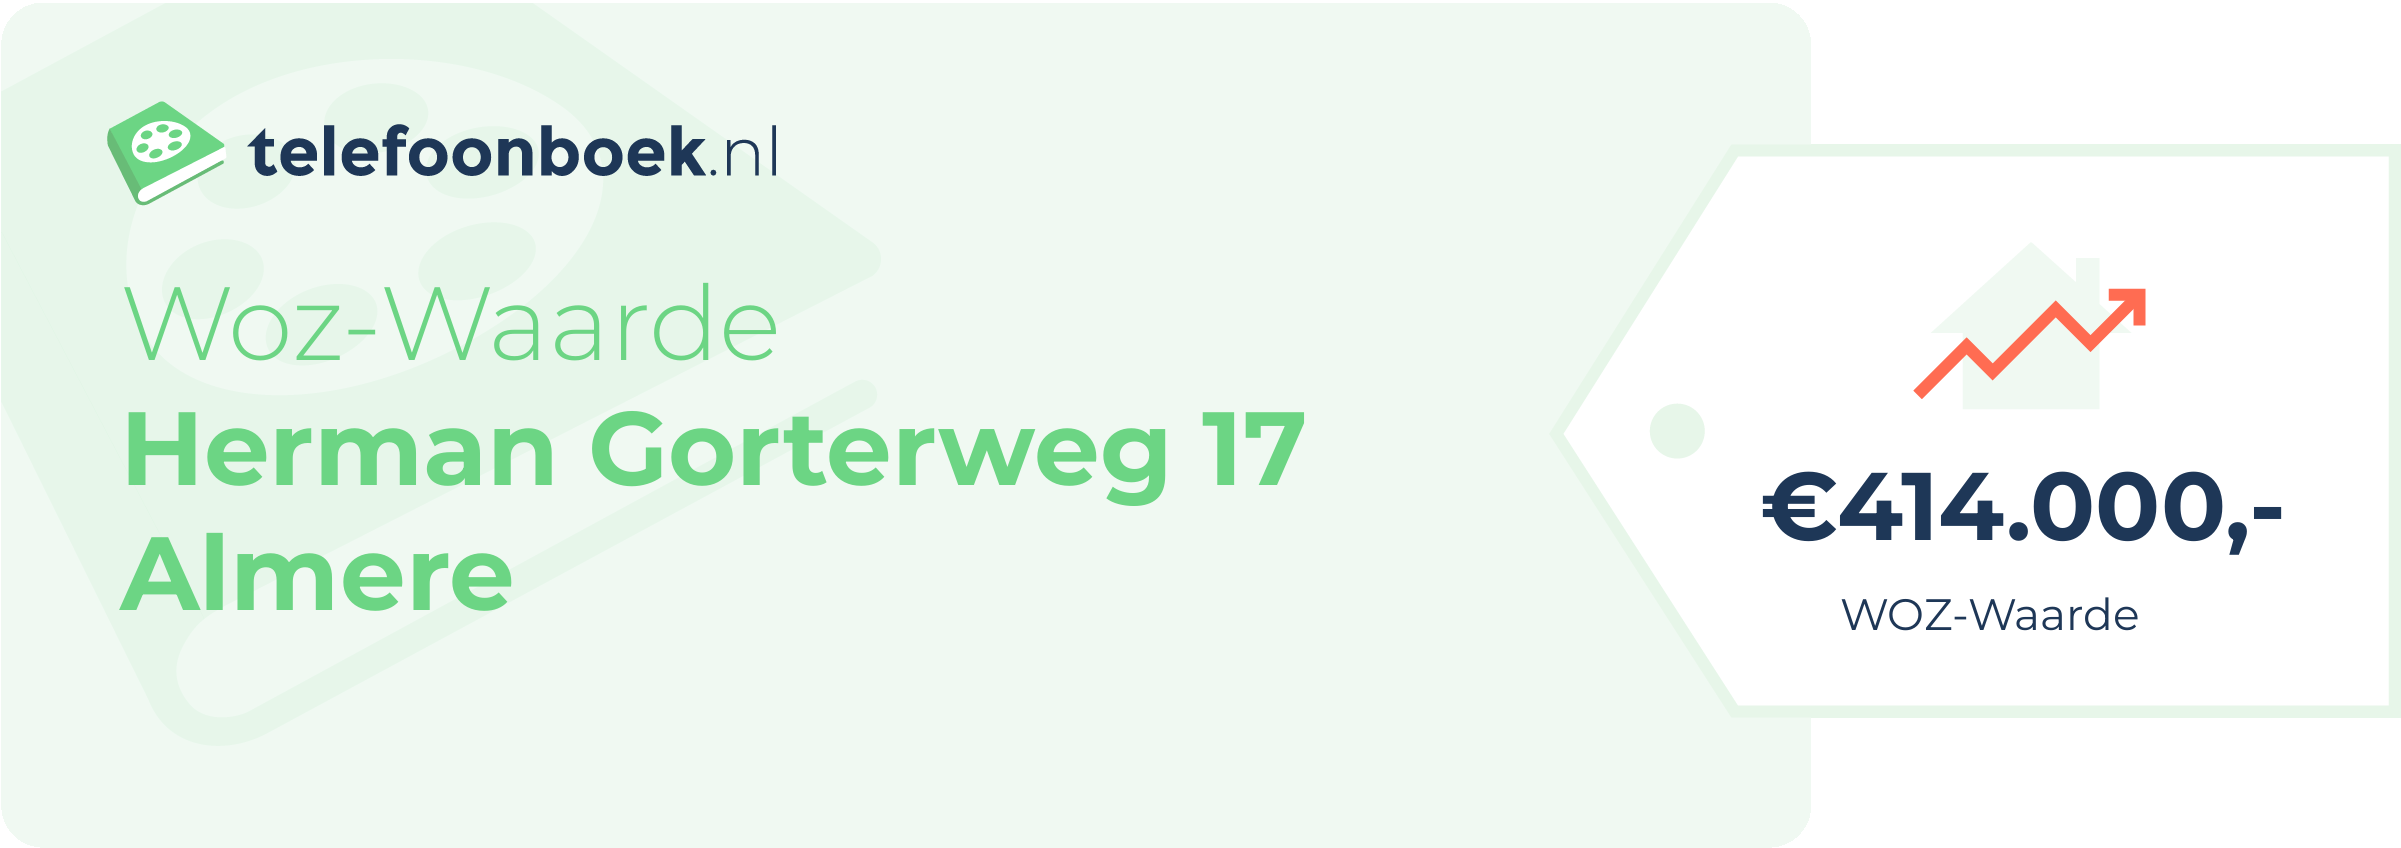 WOZ-waarde Herman Gorterweg 17 Almere